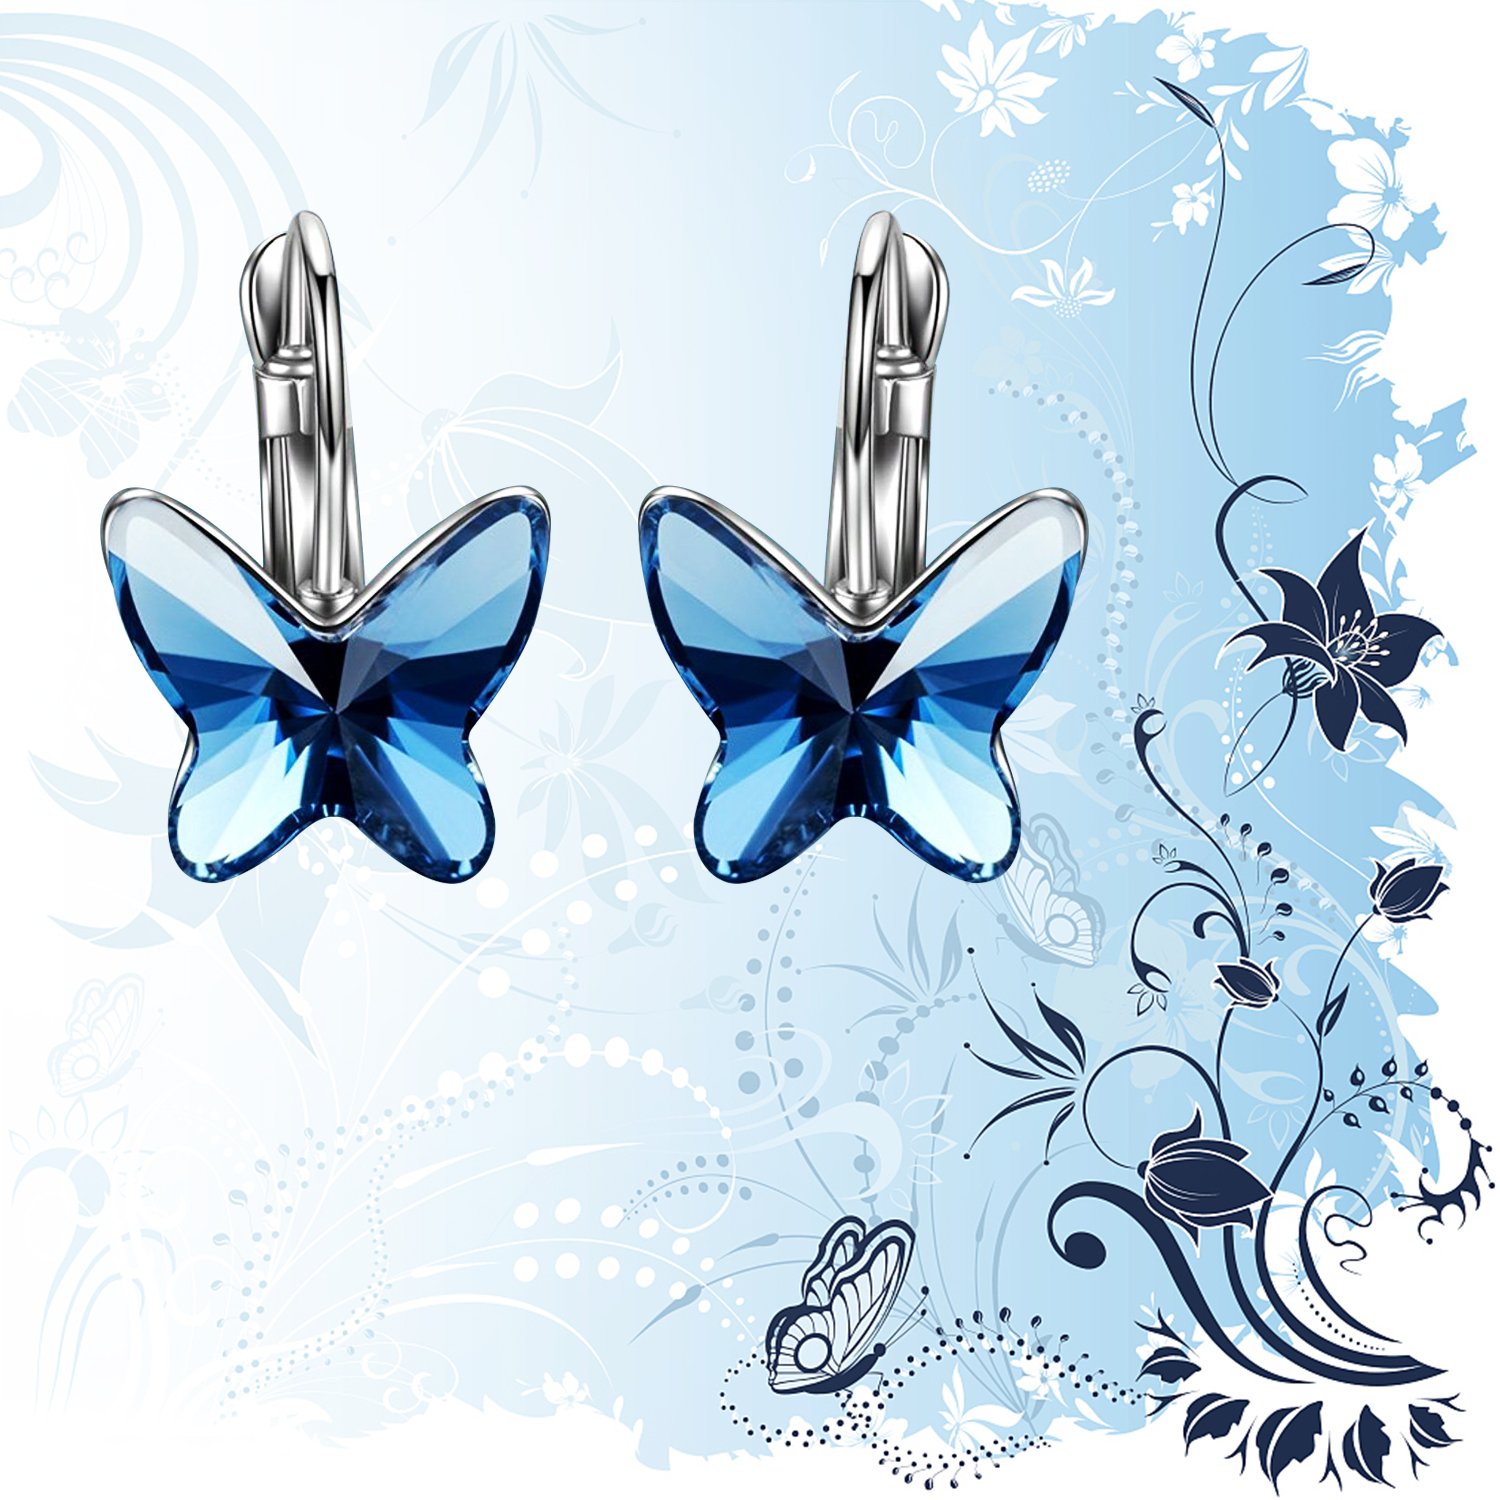 Brilla Women's Butterfly Hoop Earrings Stud Jewelry with Swarovski Crystals